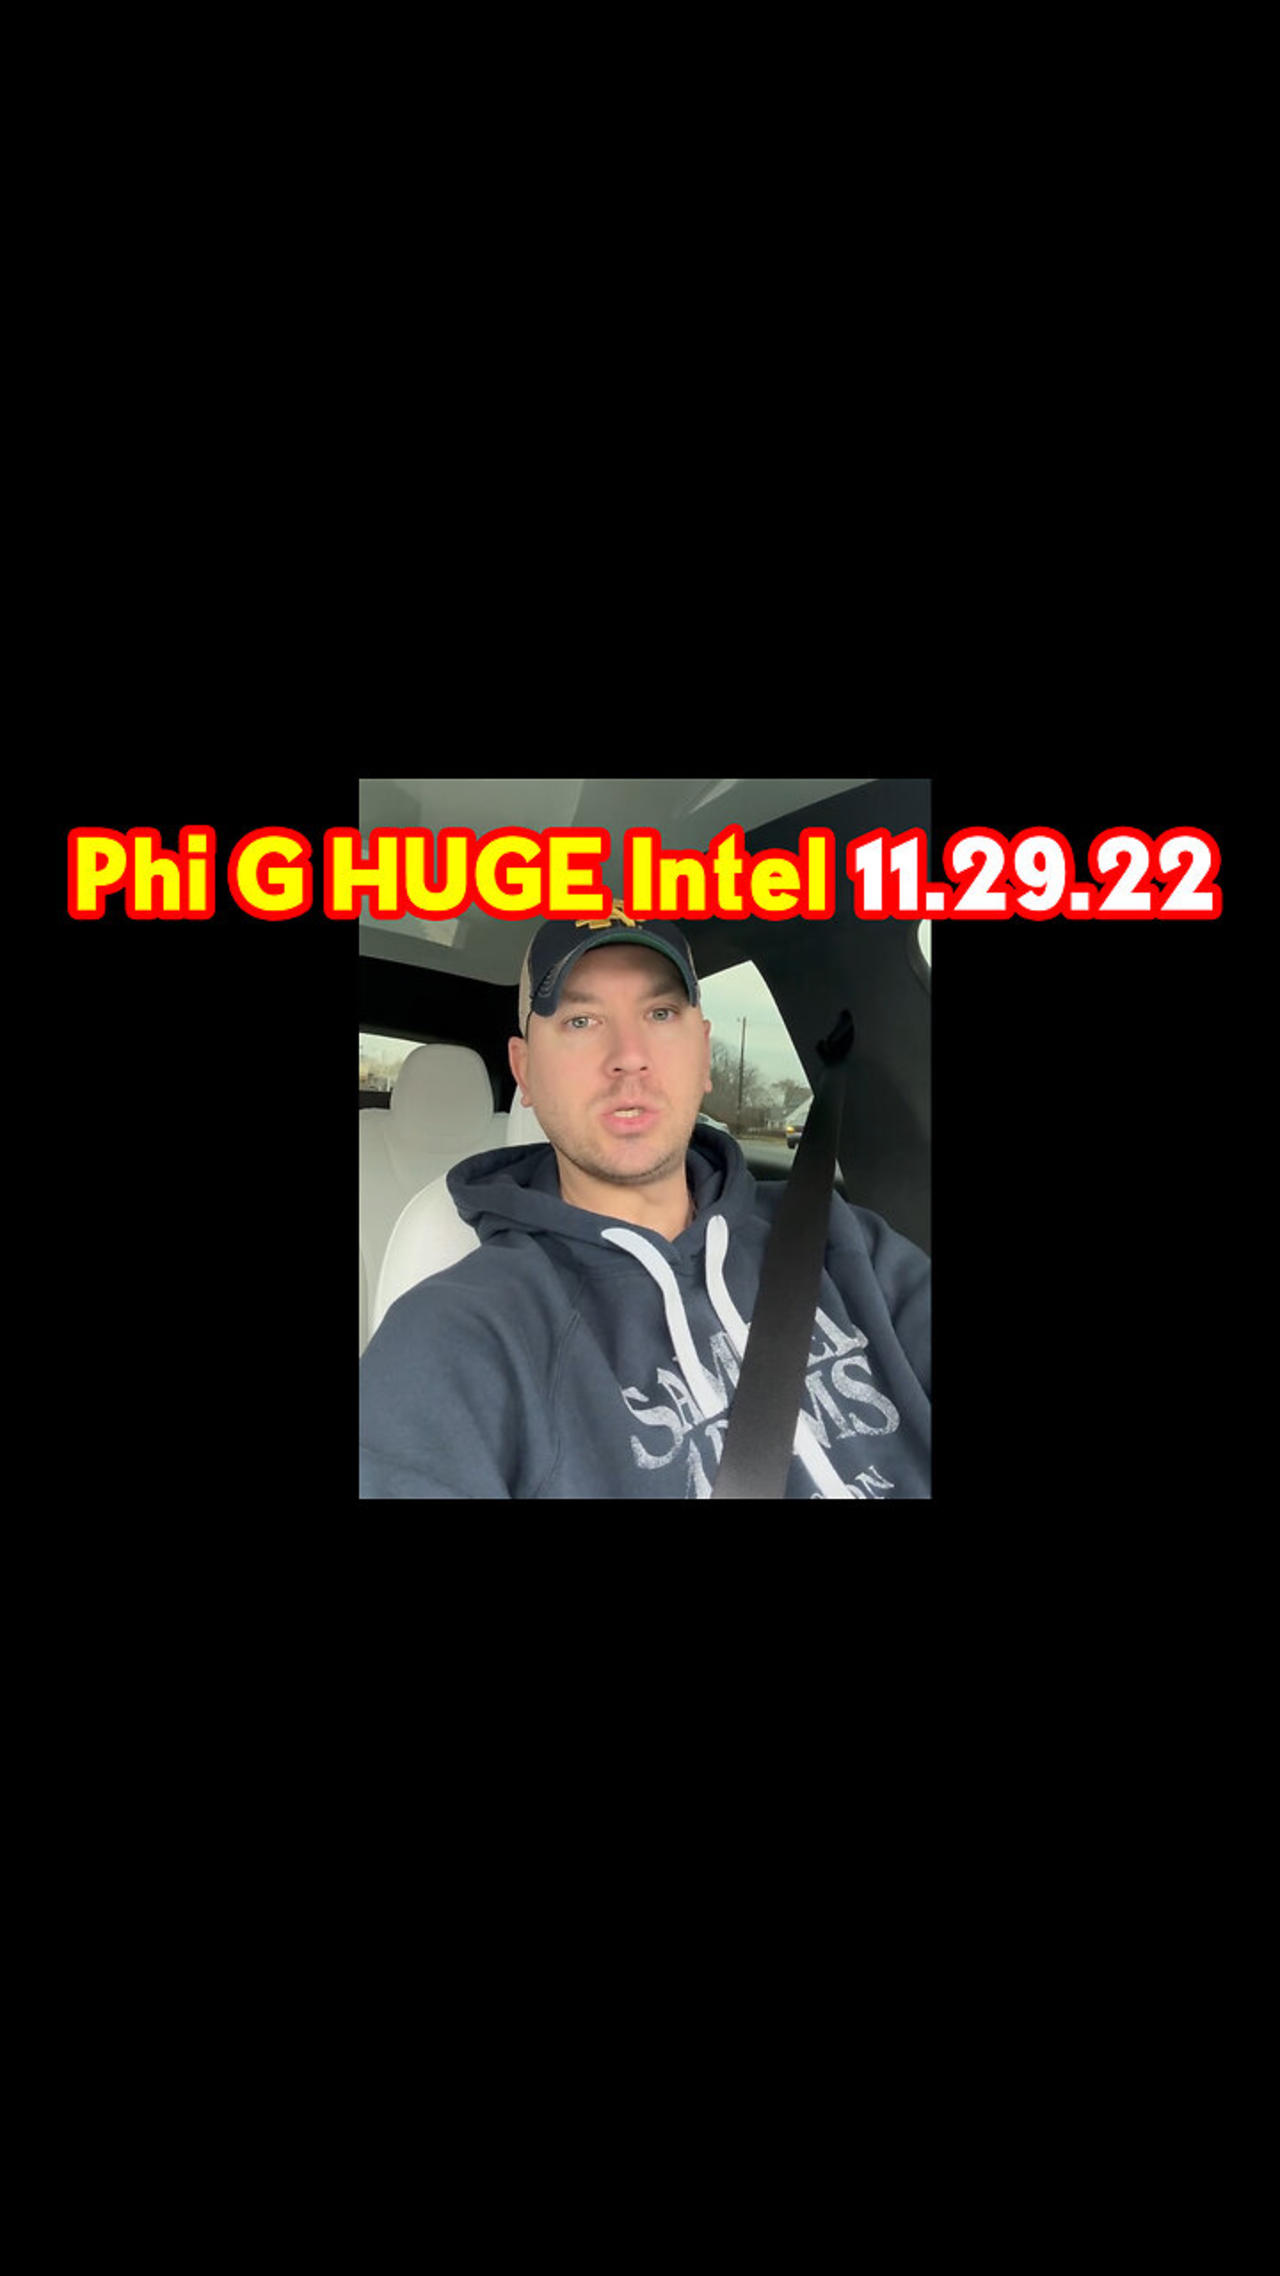 Phil Godlewski HUGE Intel 11.29.22